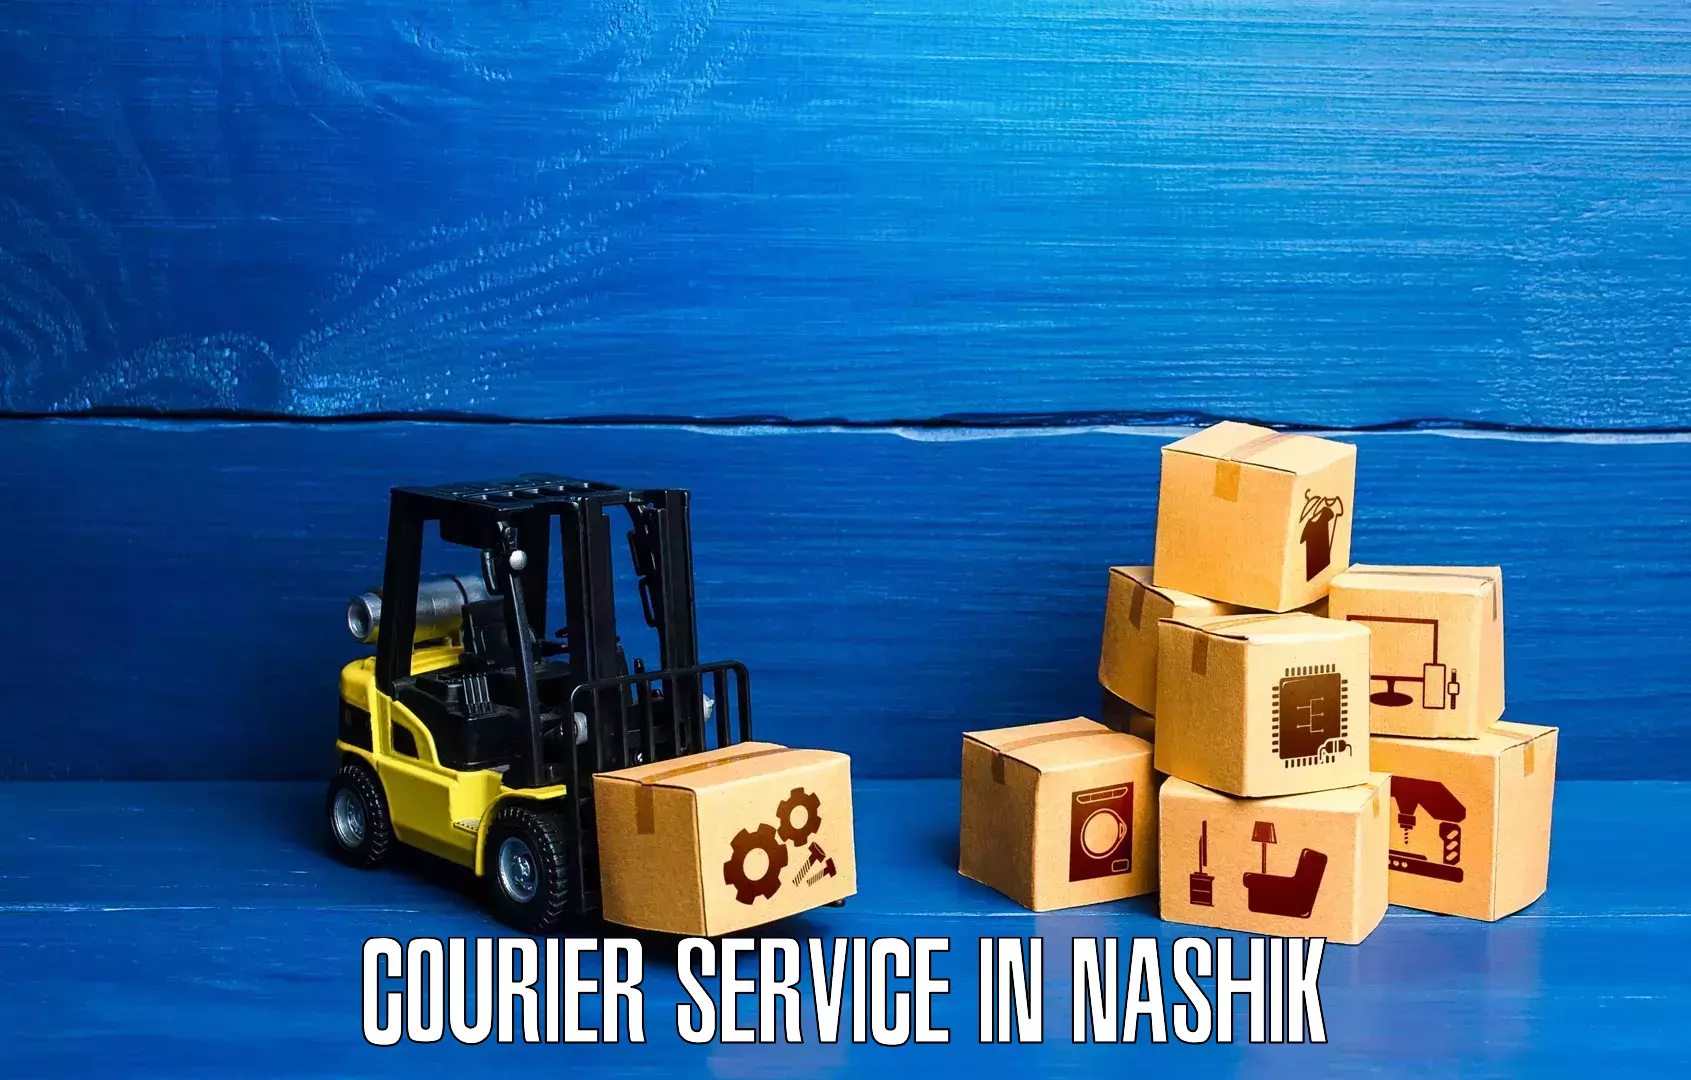 Courier service partnerships in Nashik